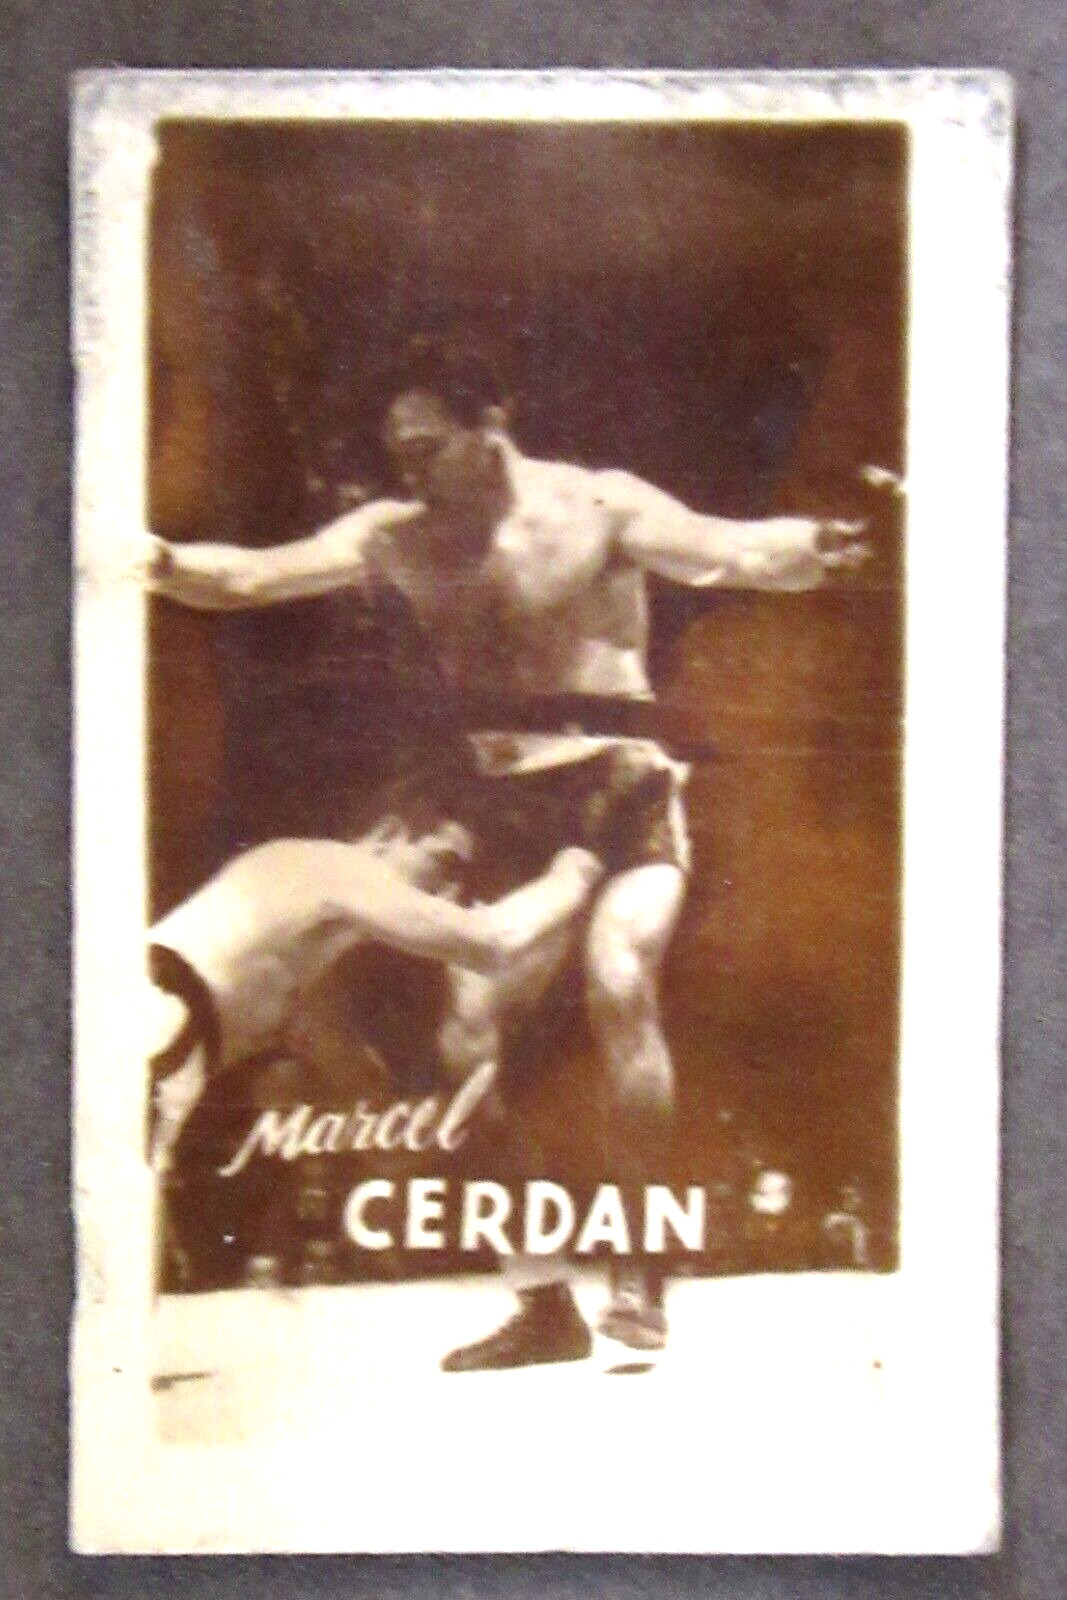 1948 MARCEL CERDAN Boxing Champions #23 Topps Magic Photo trading card